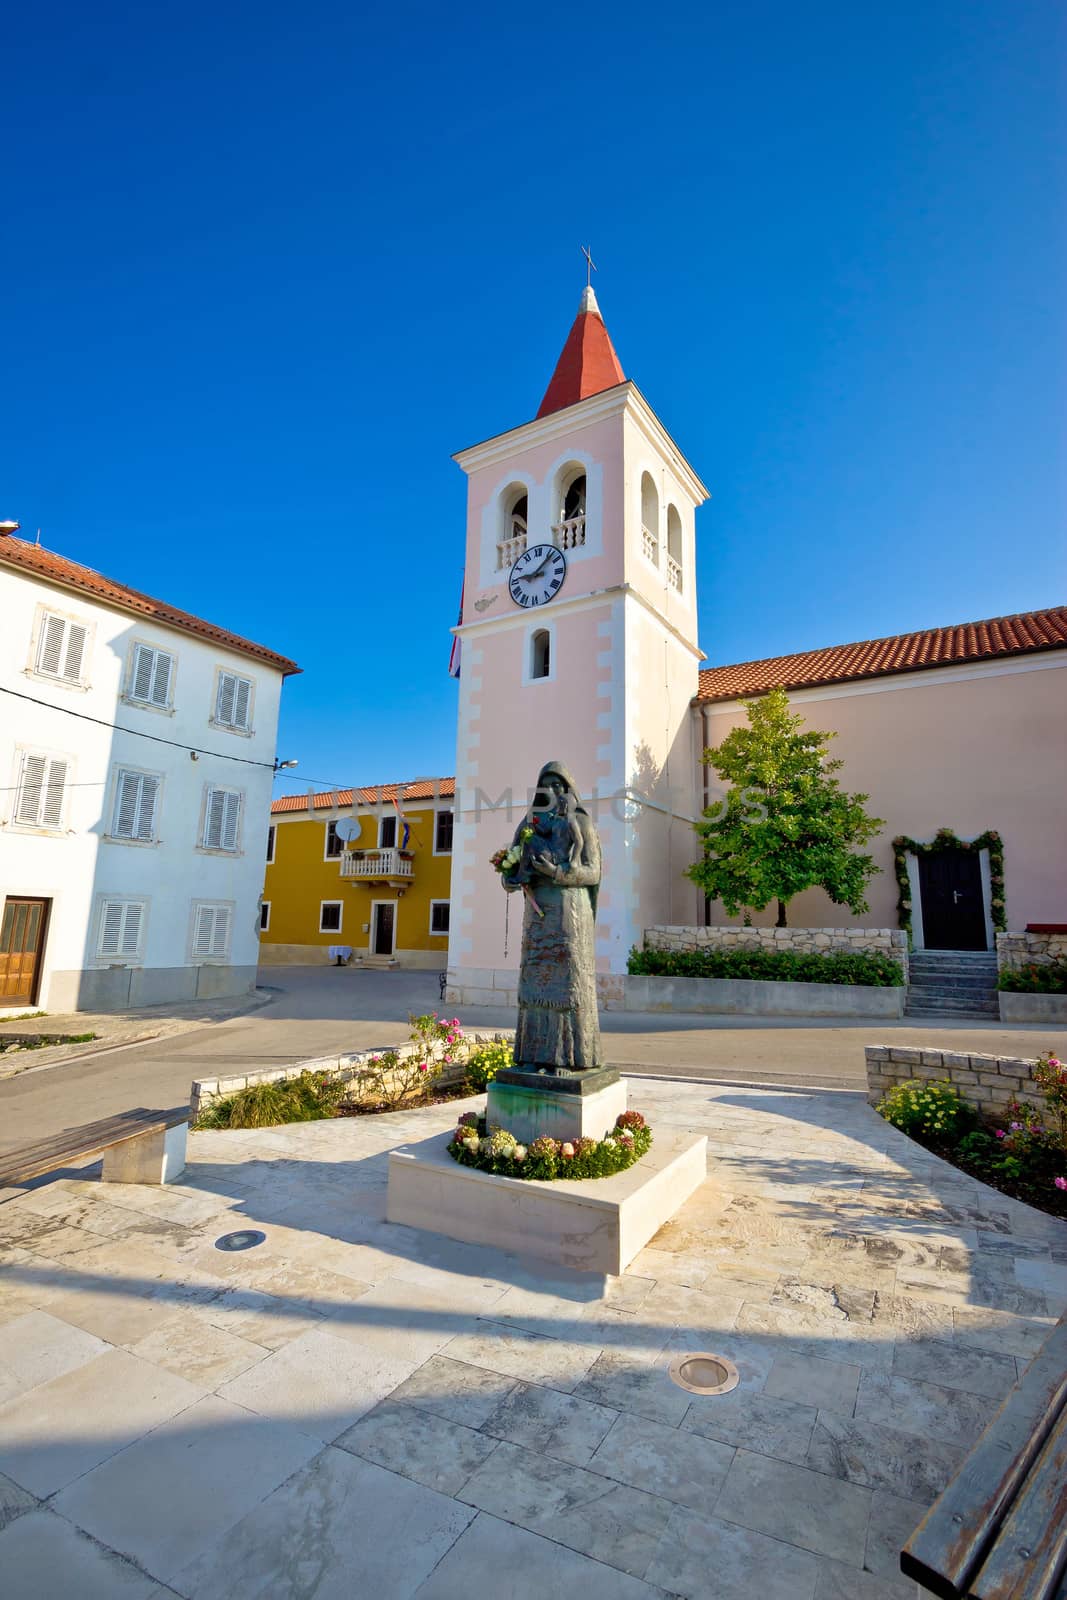 Diklo square and church view, Dalmatia, Croatia